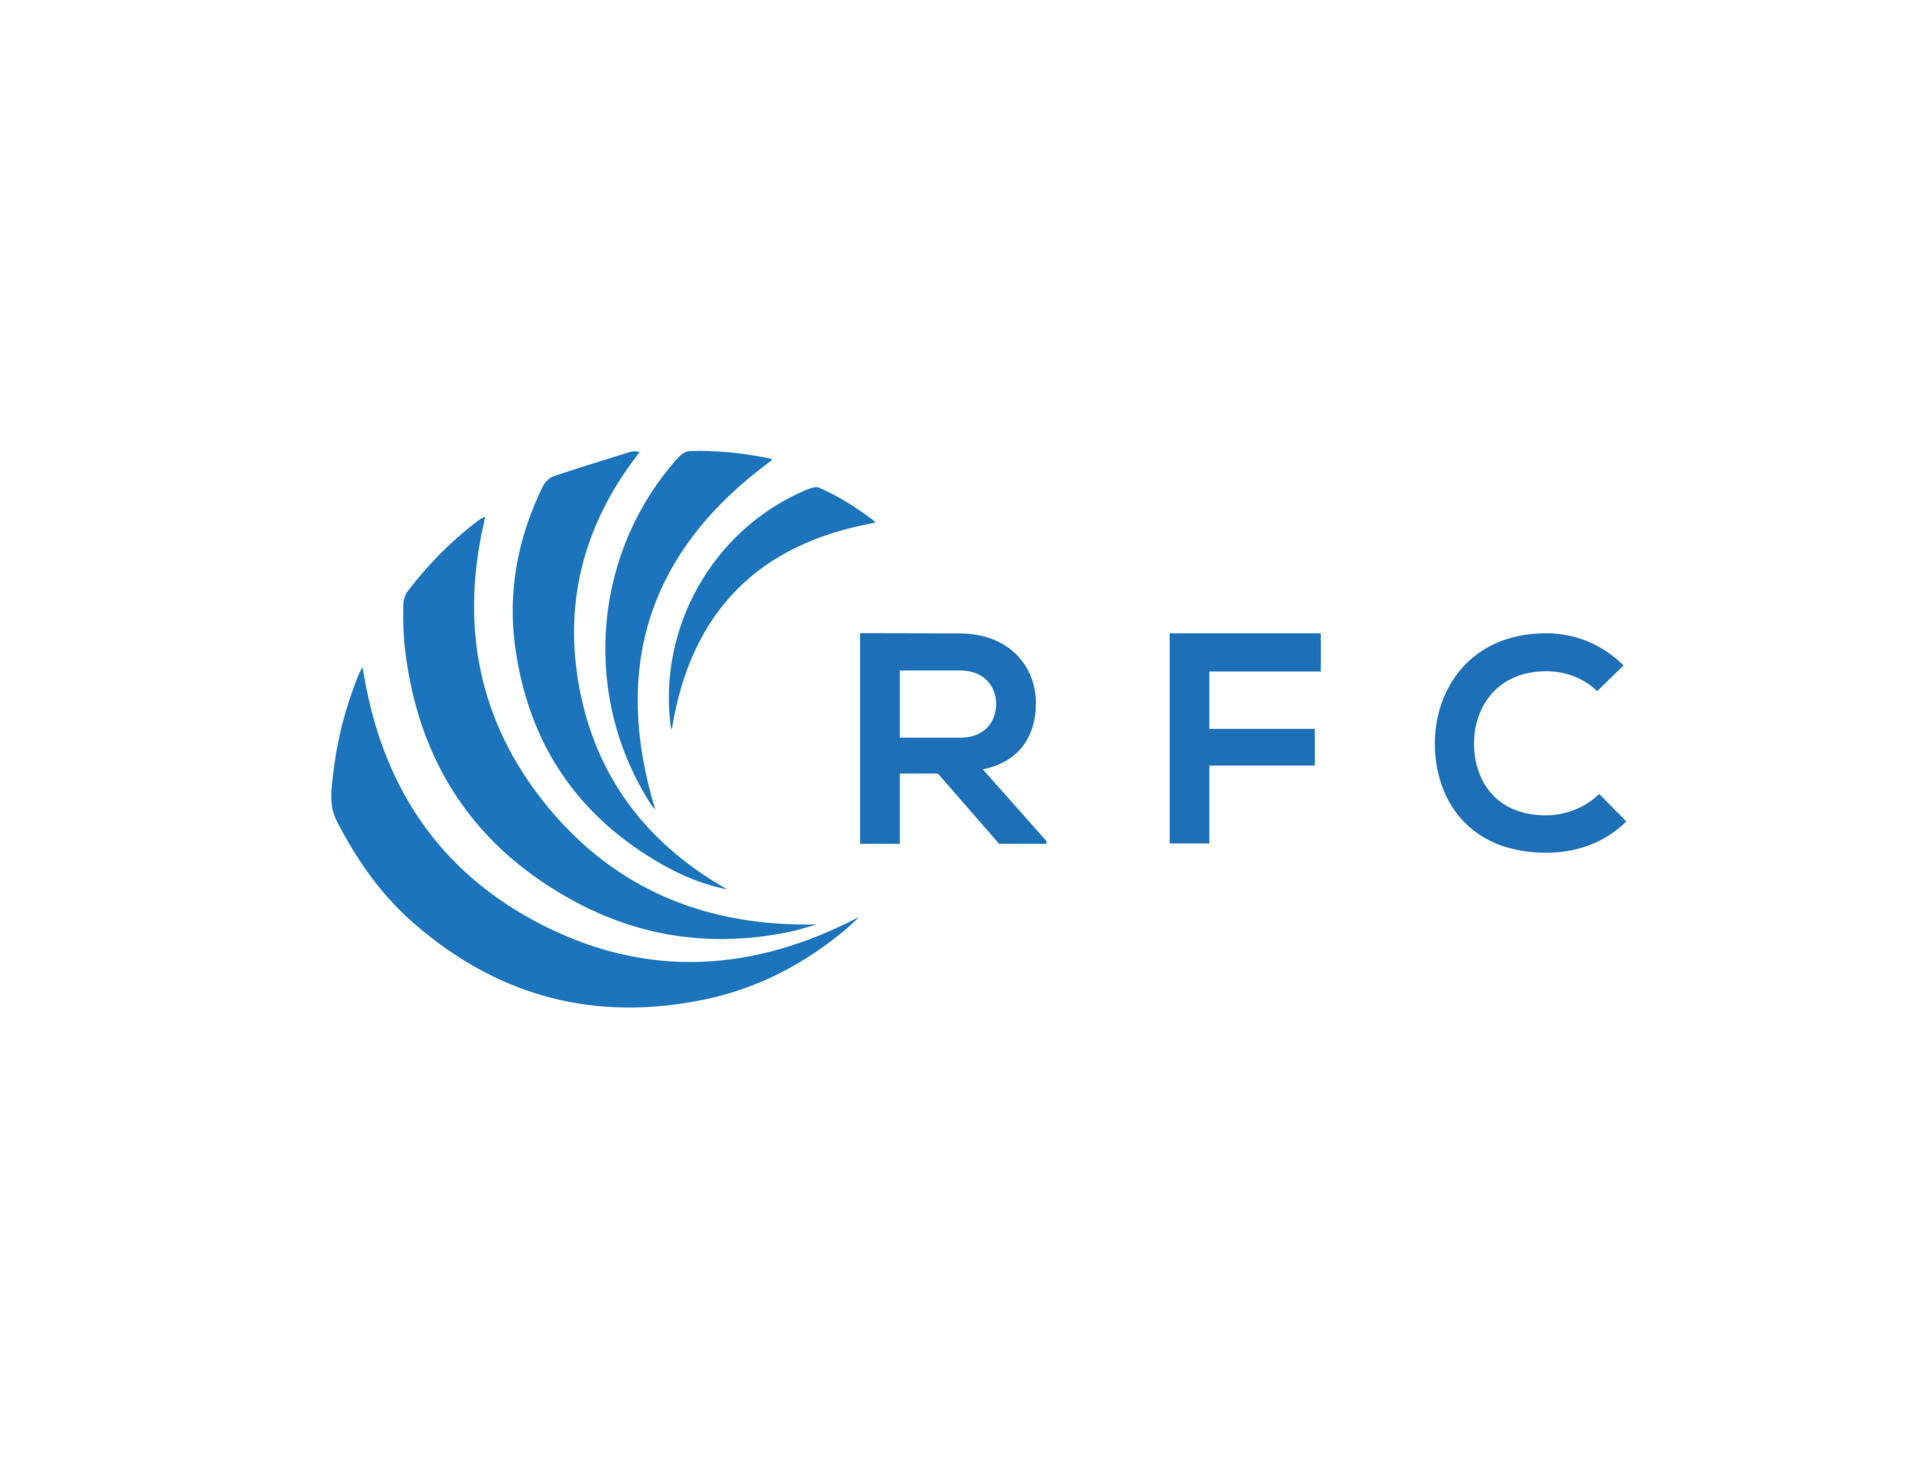 RFc letter logo design on white background. RFc creative circle letter ...